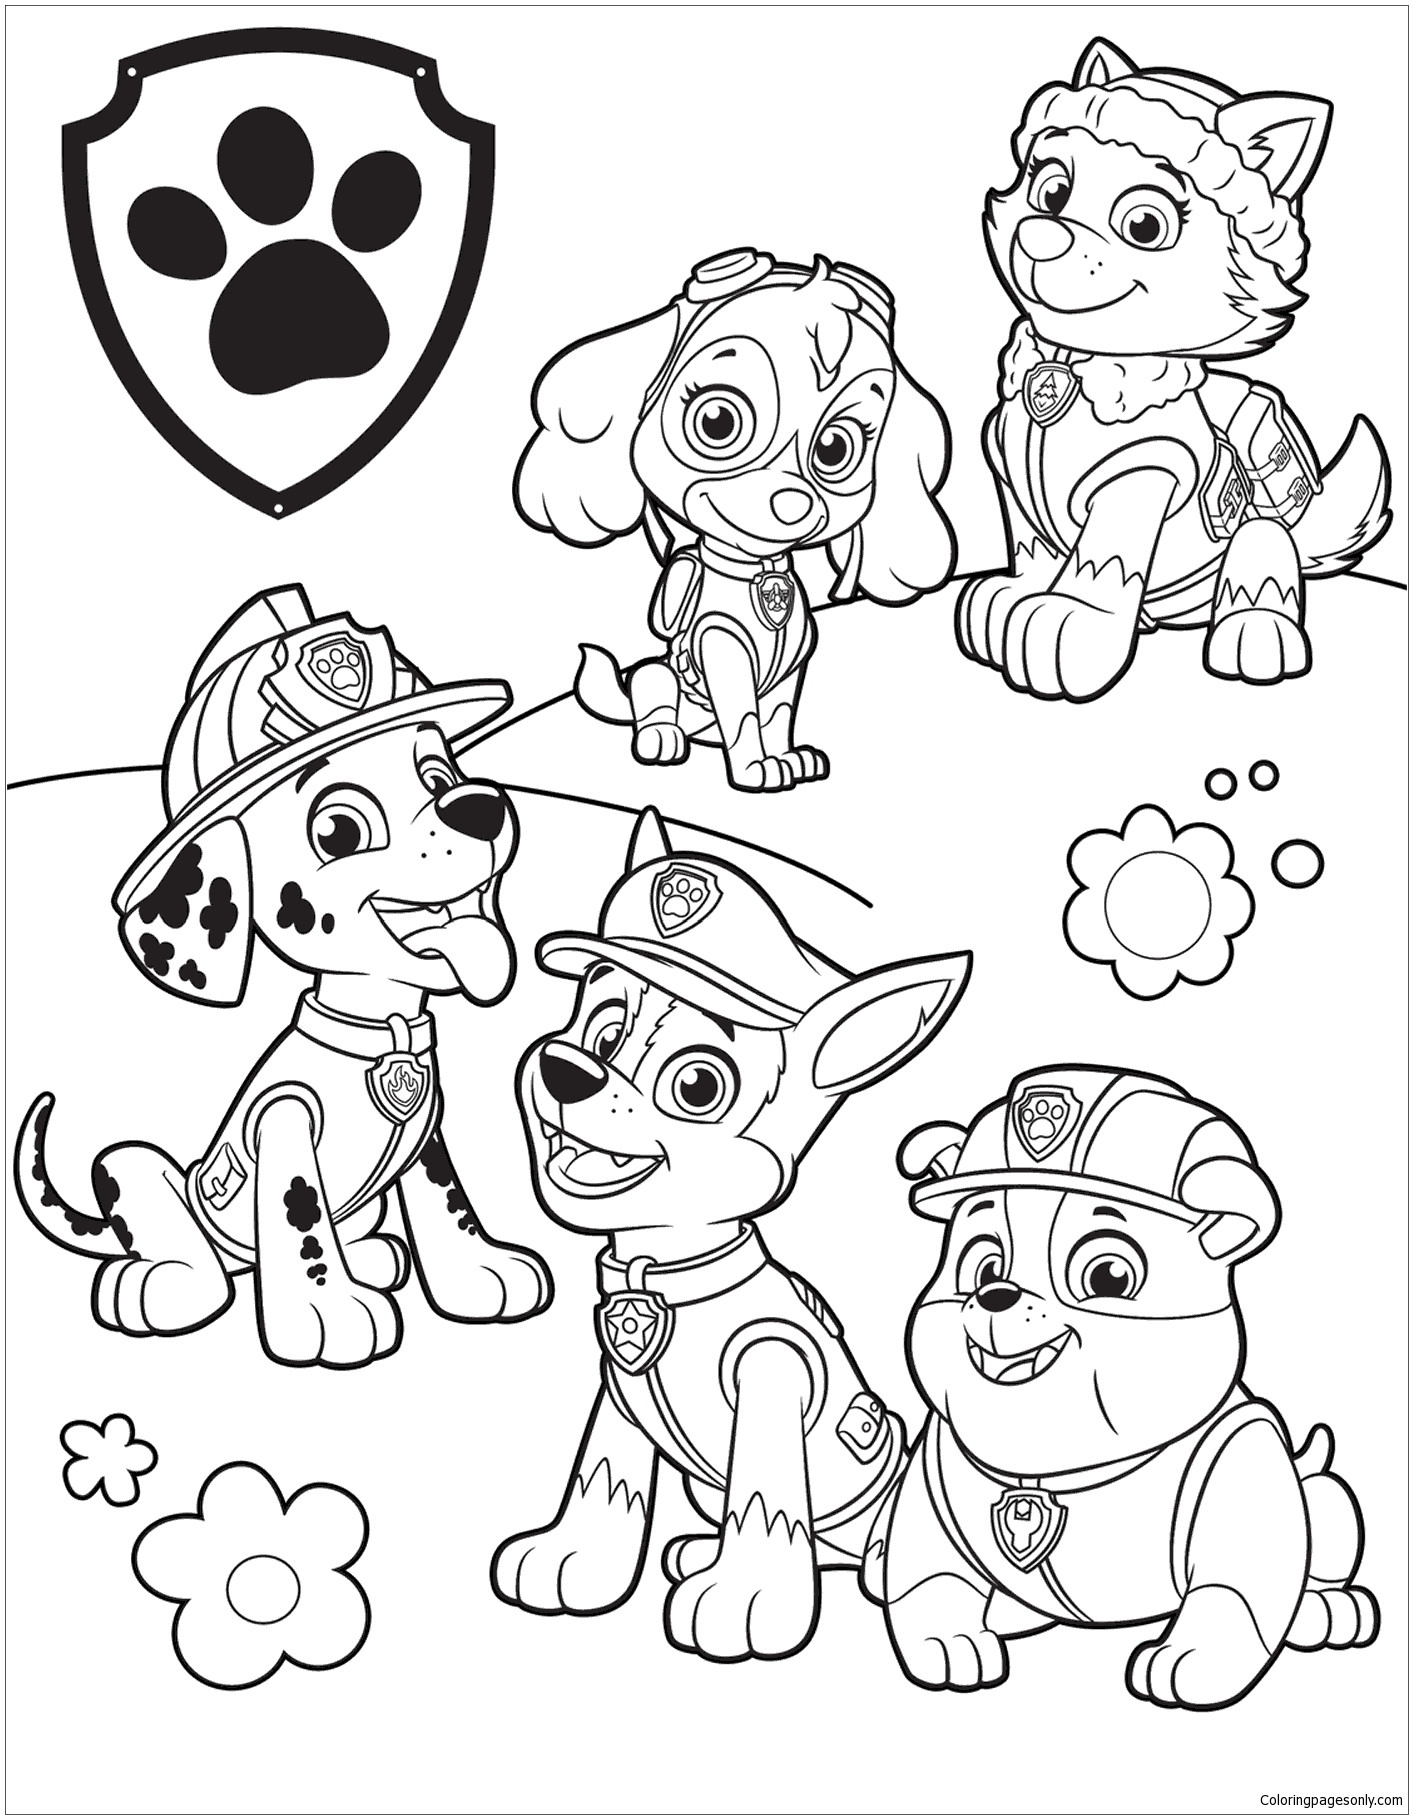 Free Paw Patrol Coloring Pages
 Paw Patrol 39 Coloring Page Free Coloring Pages line